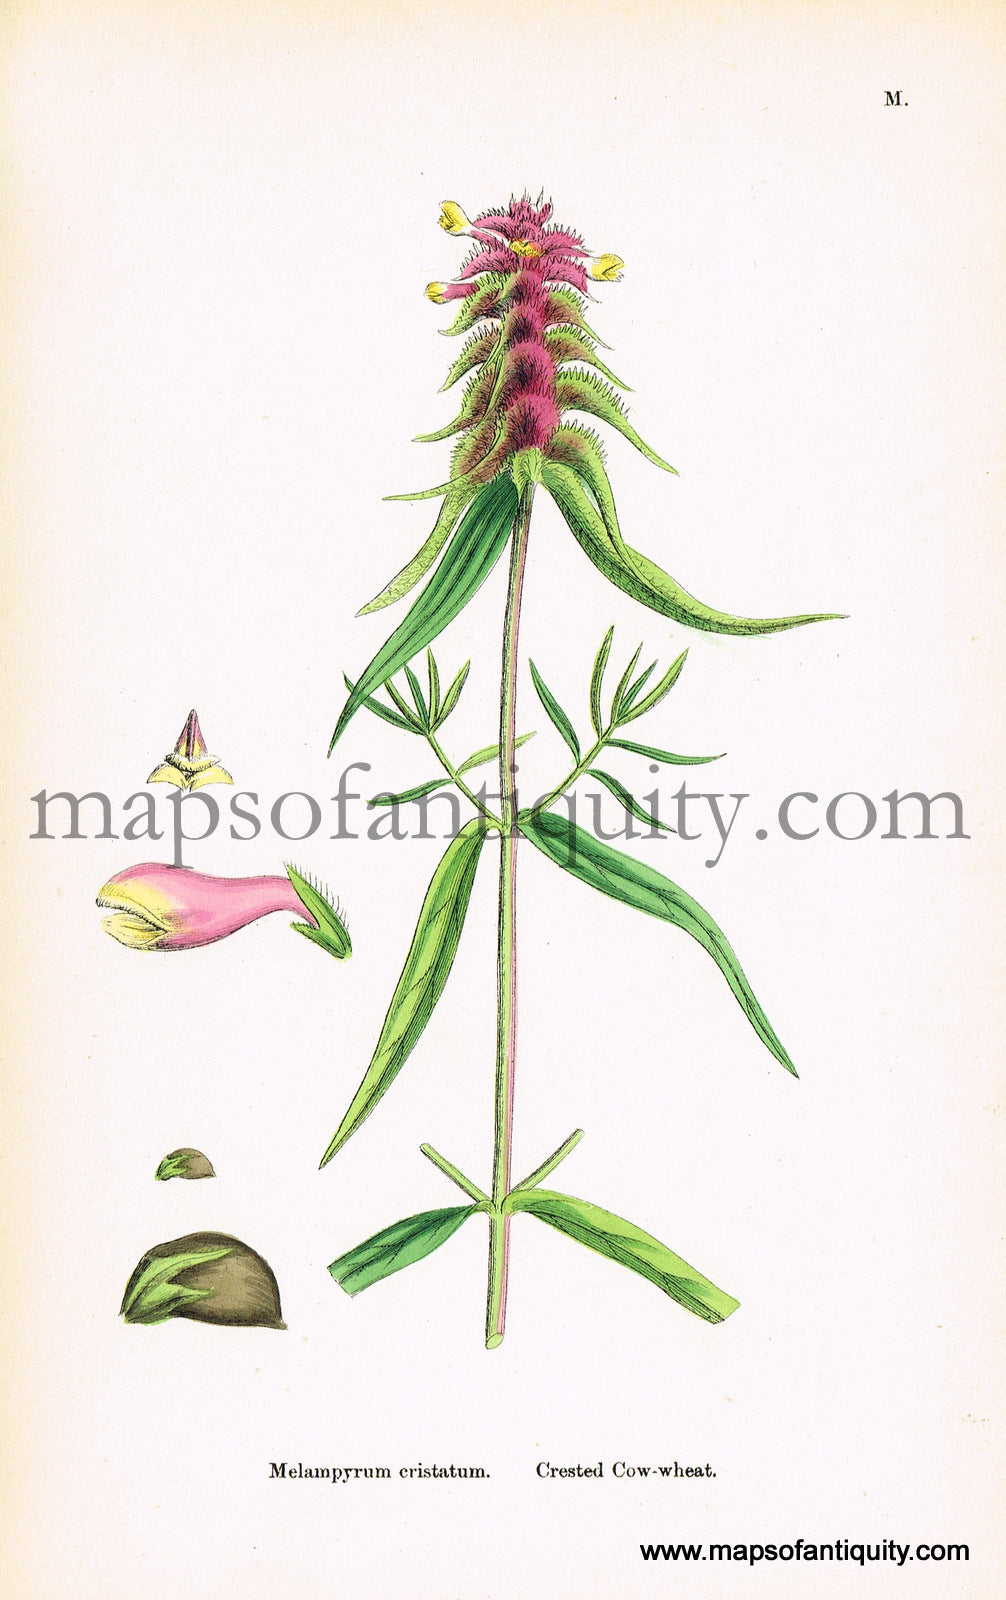 Antique-Hand-Colored-Print-Melampyrum-cristatum-Antique-Prints-Natural-History-Botanical-c.-1860-Sowerby-Maps-Of-Antiquity